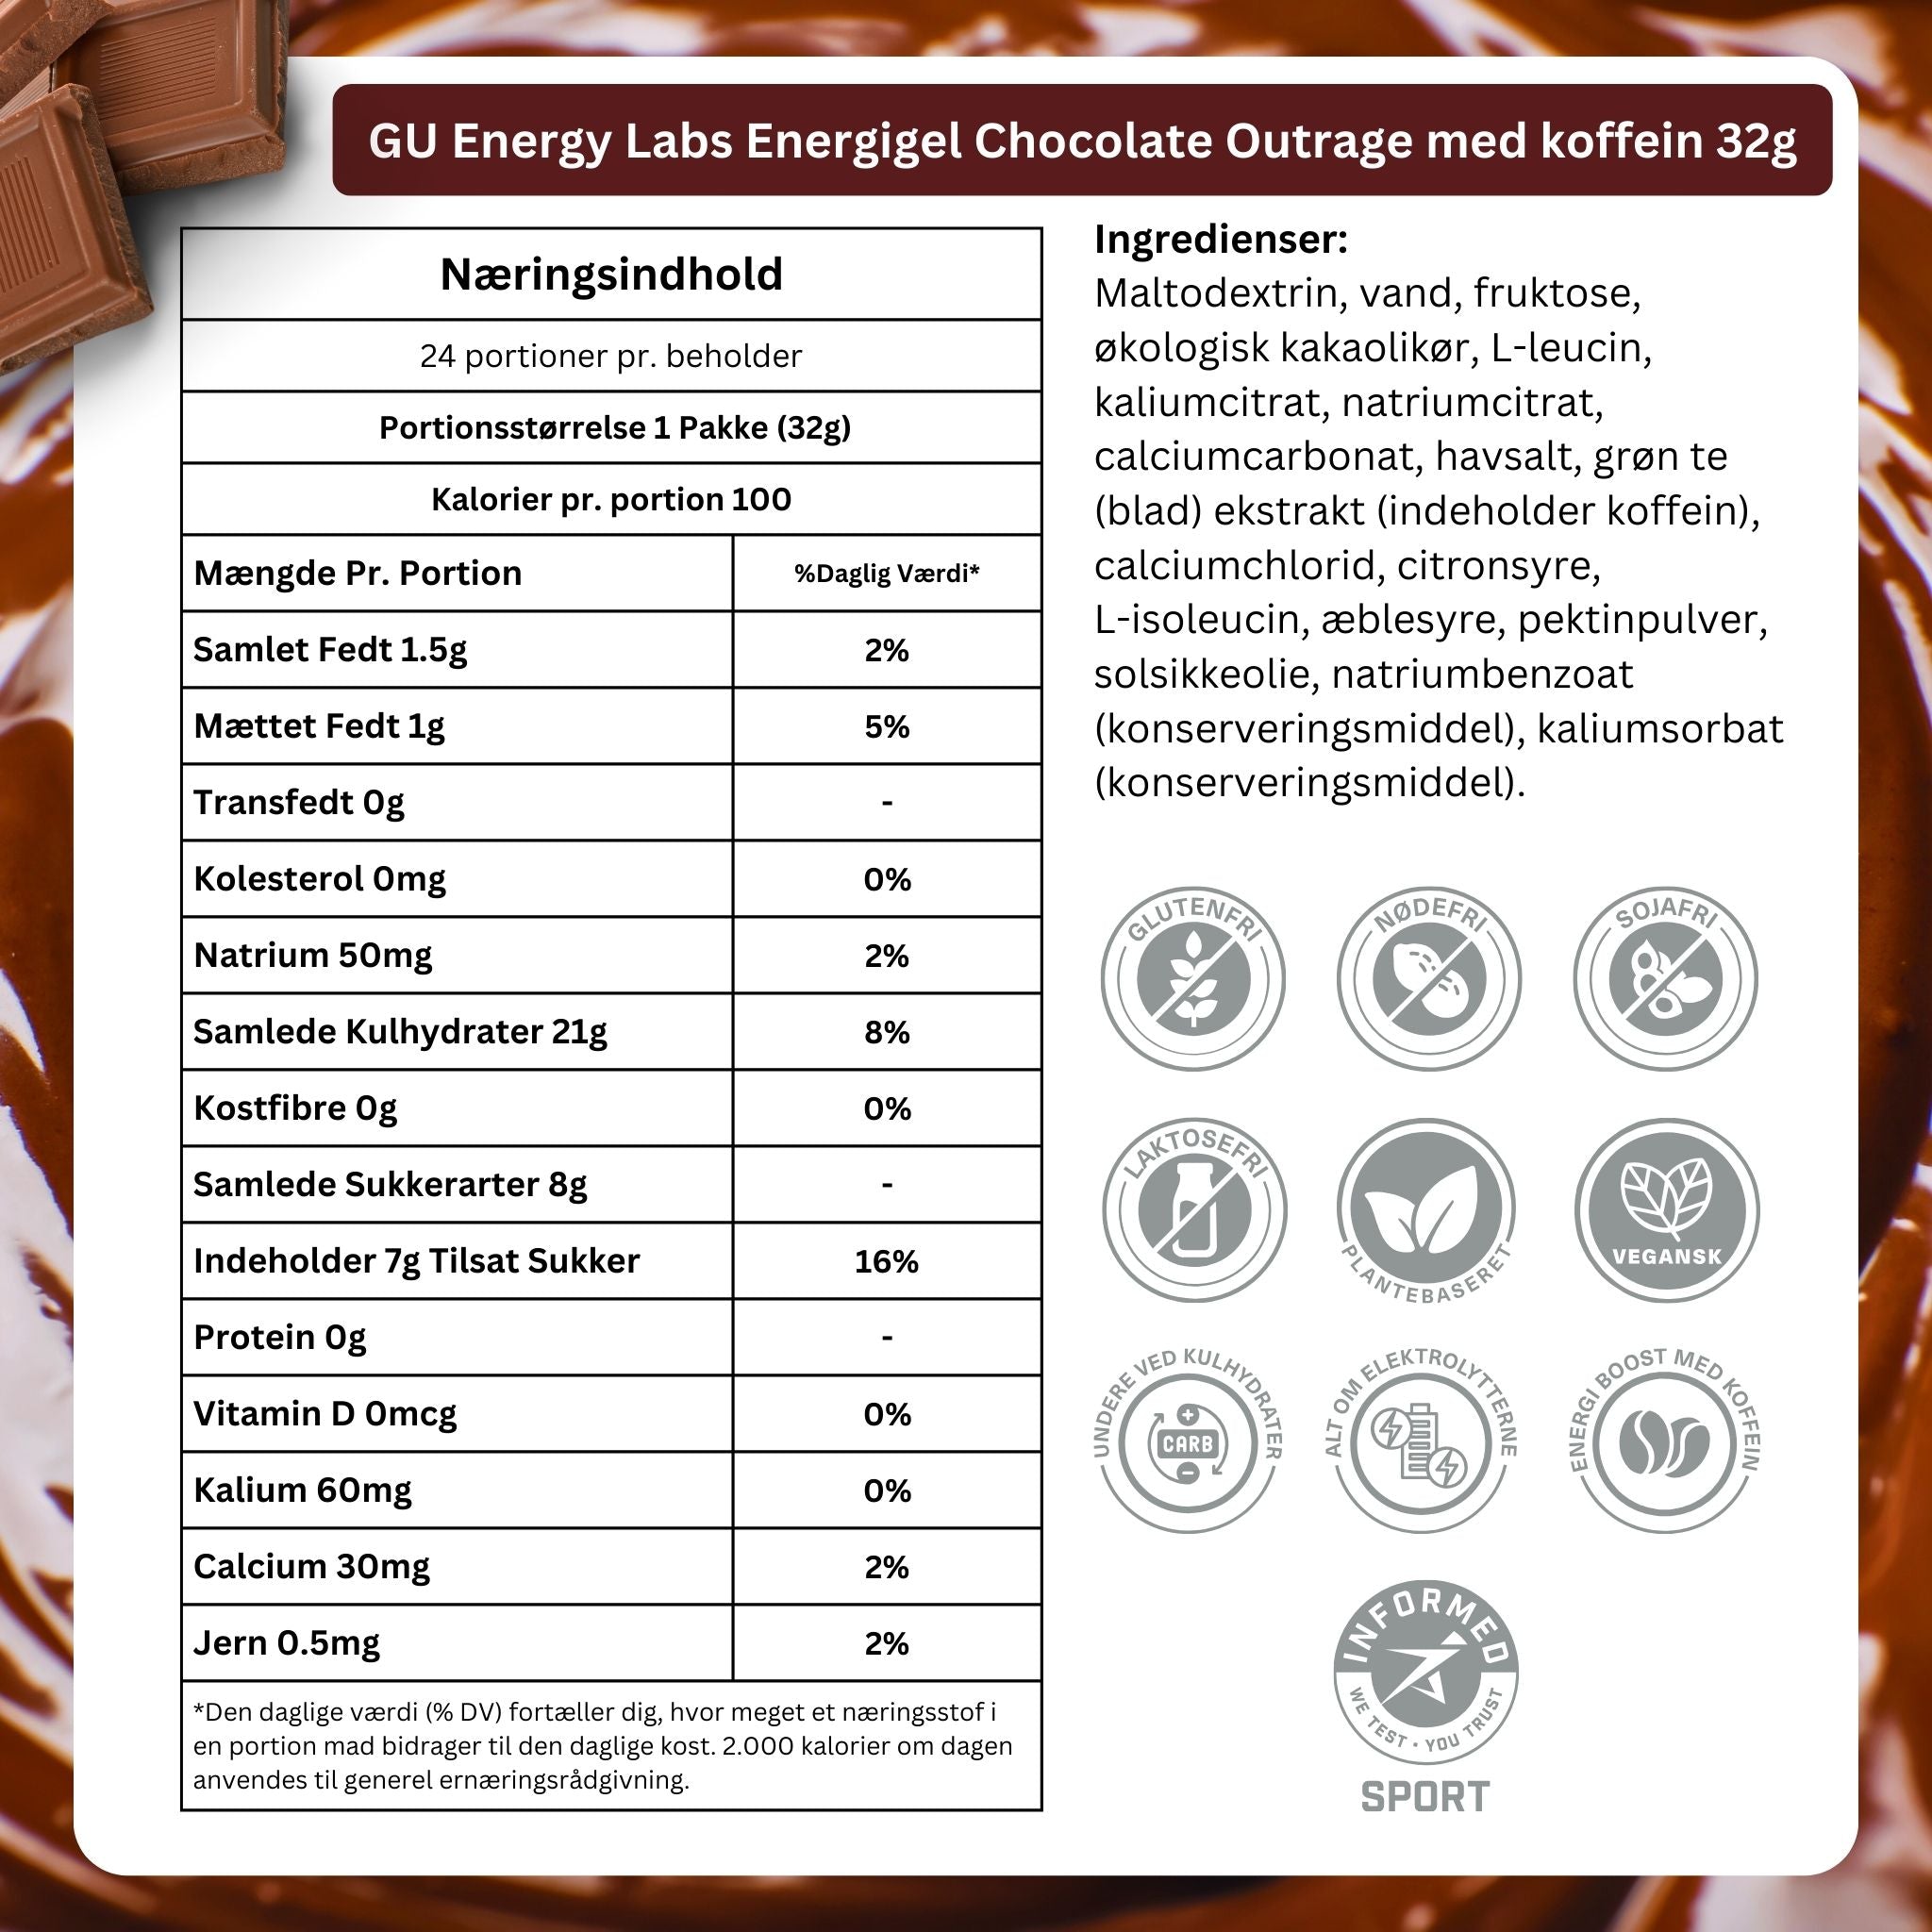 GU Energy Energigel Chocolate Outrage med koffein 32g